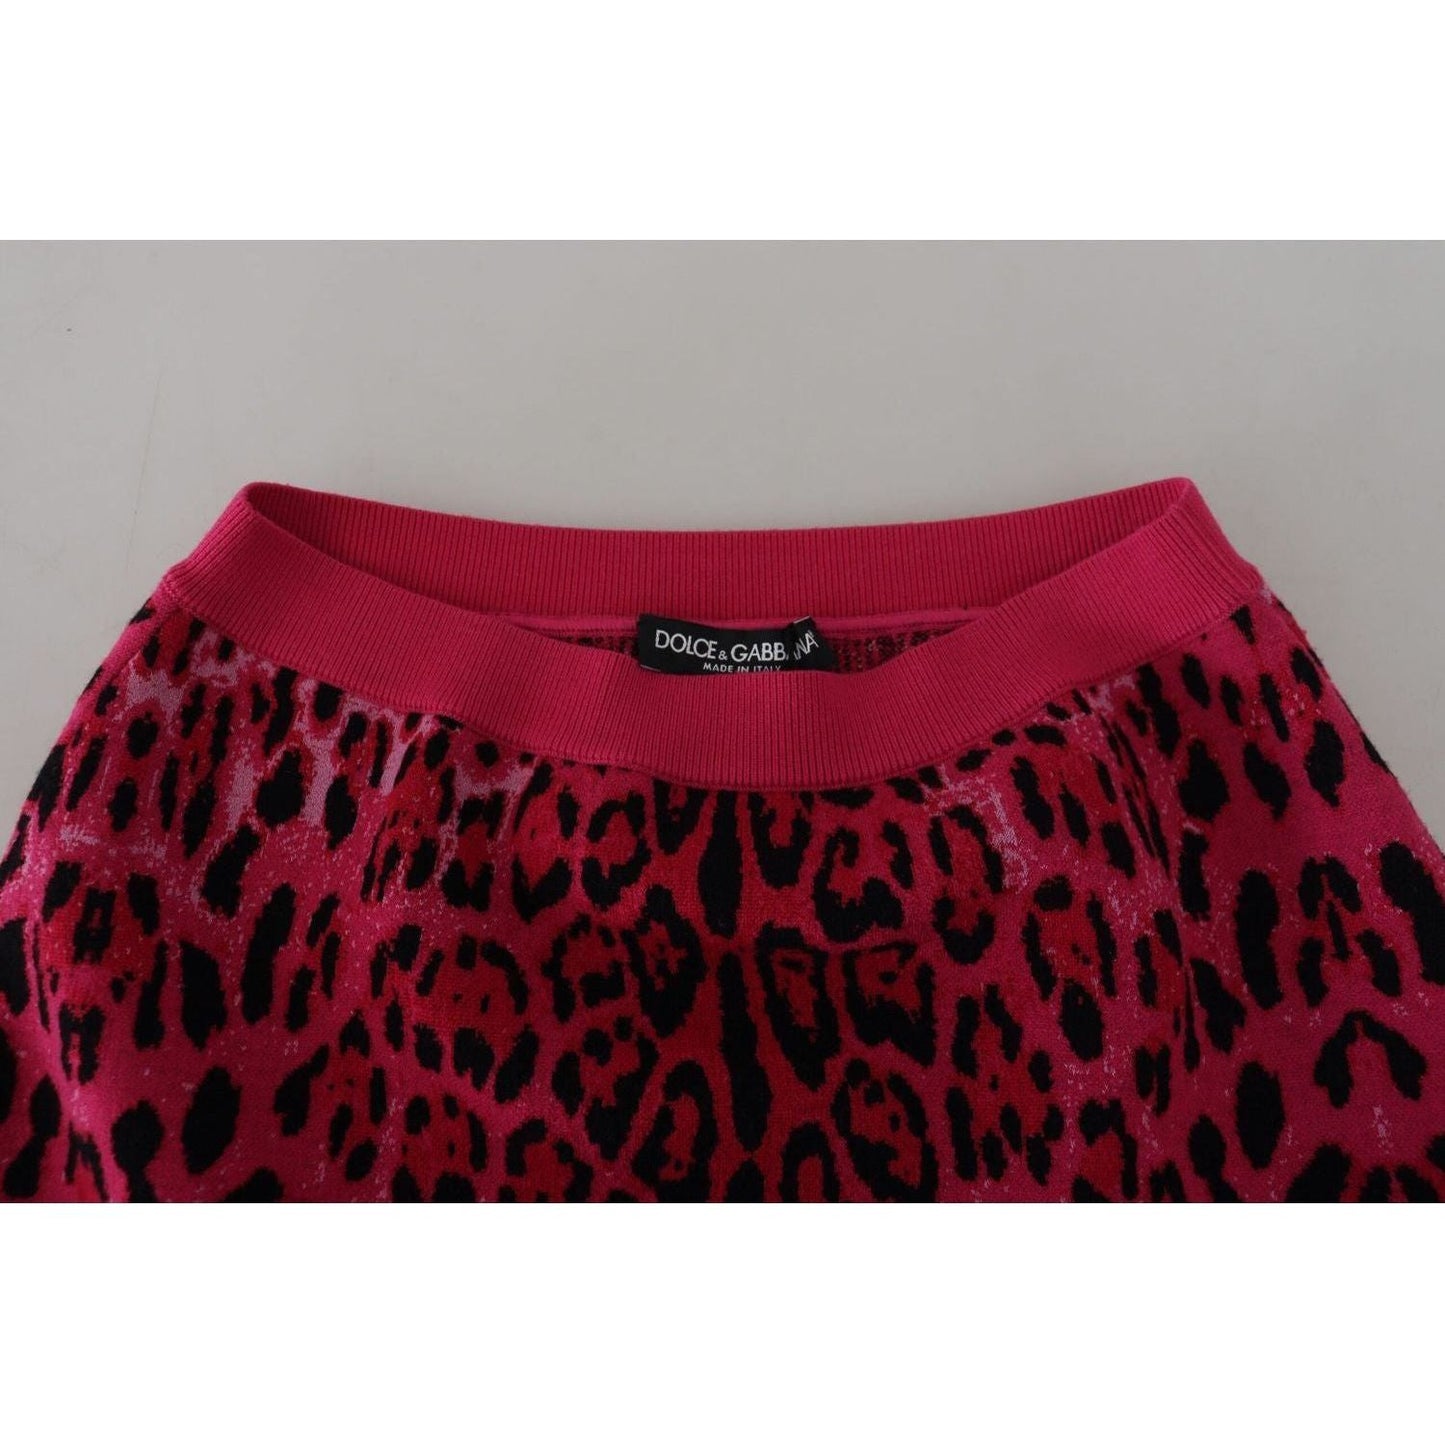 Dolce & Gabbana Chic High Waist Pink Leopard Mini Skirt pink-leopard-high-waist-a-line-mini-skirt IMG_3339-scaled-8c1c4b9b-4f0.jpg